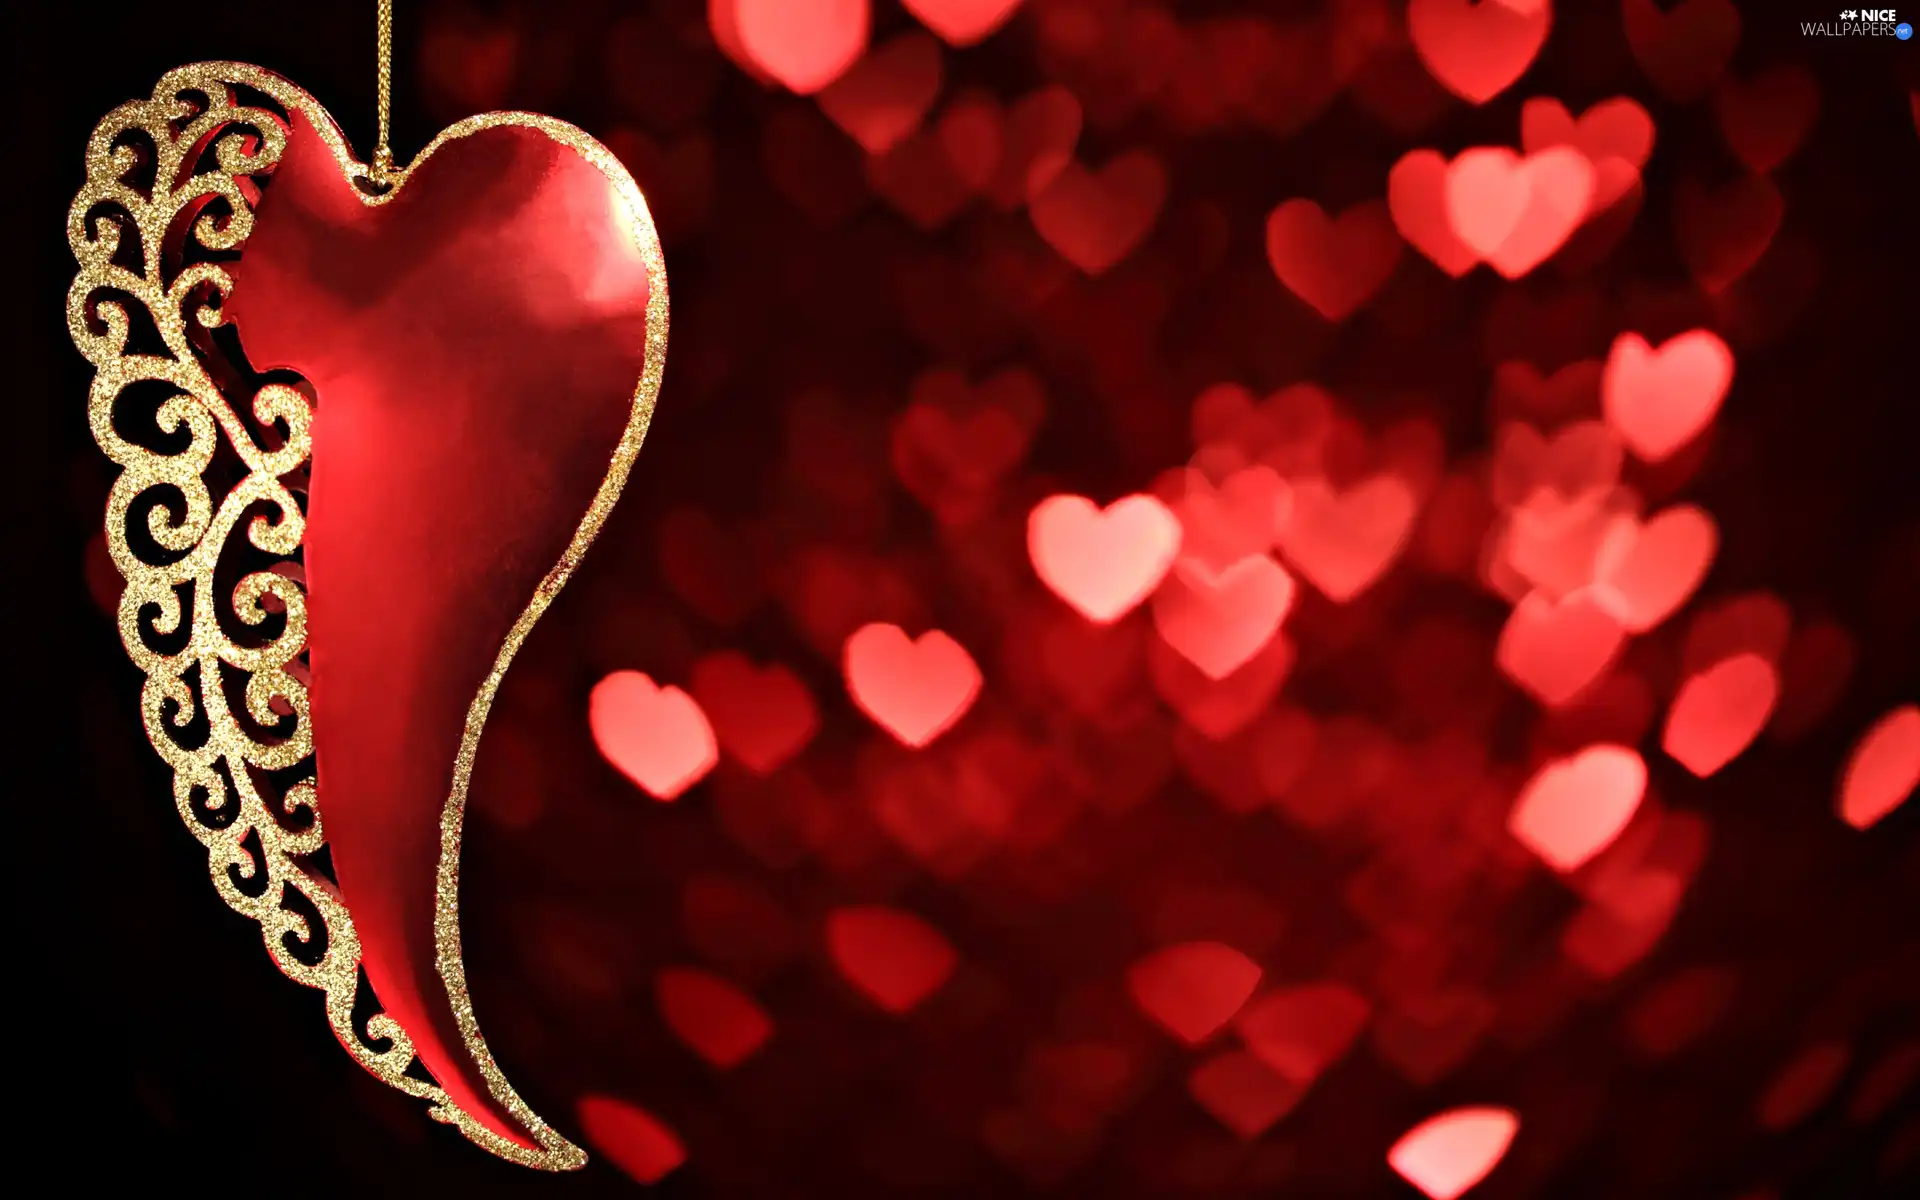 Heart, Red, lights, love